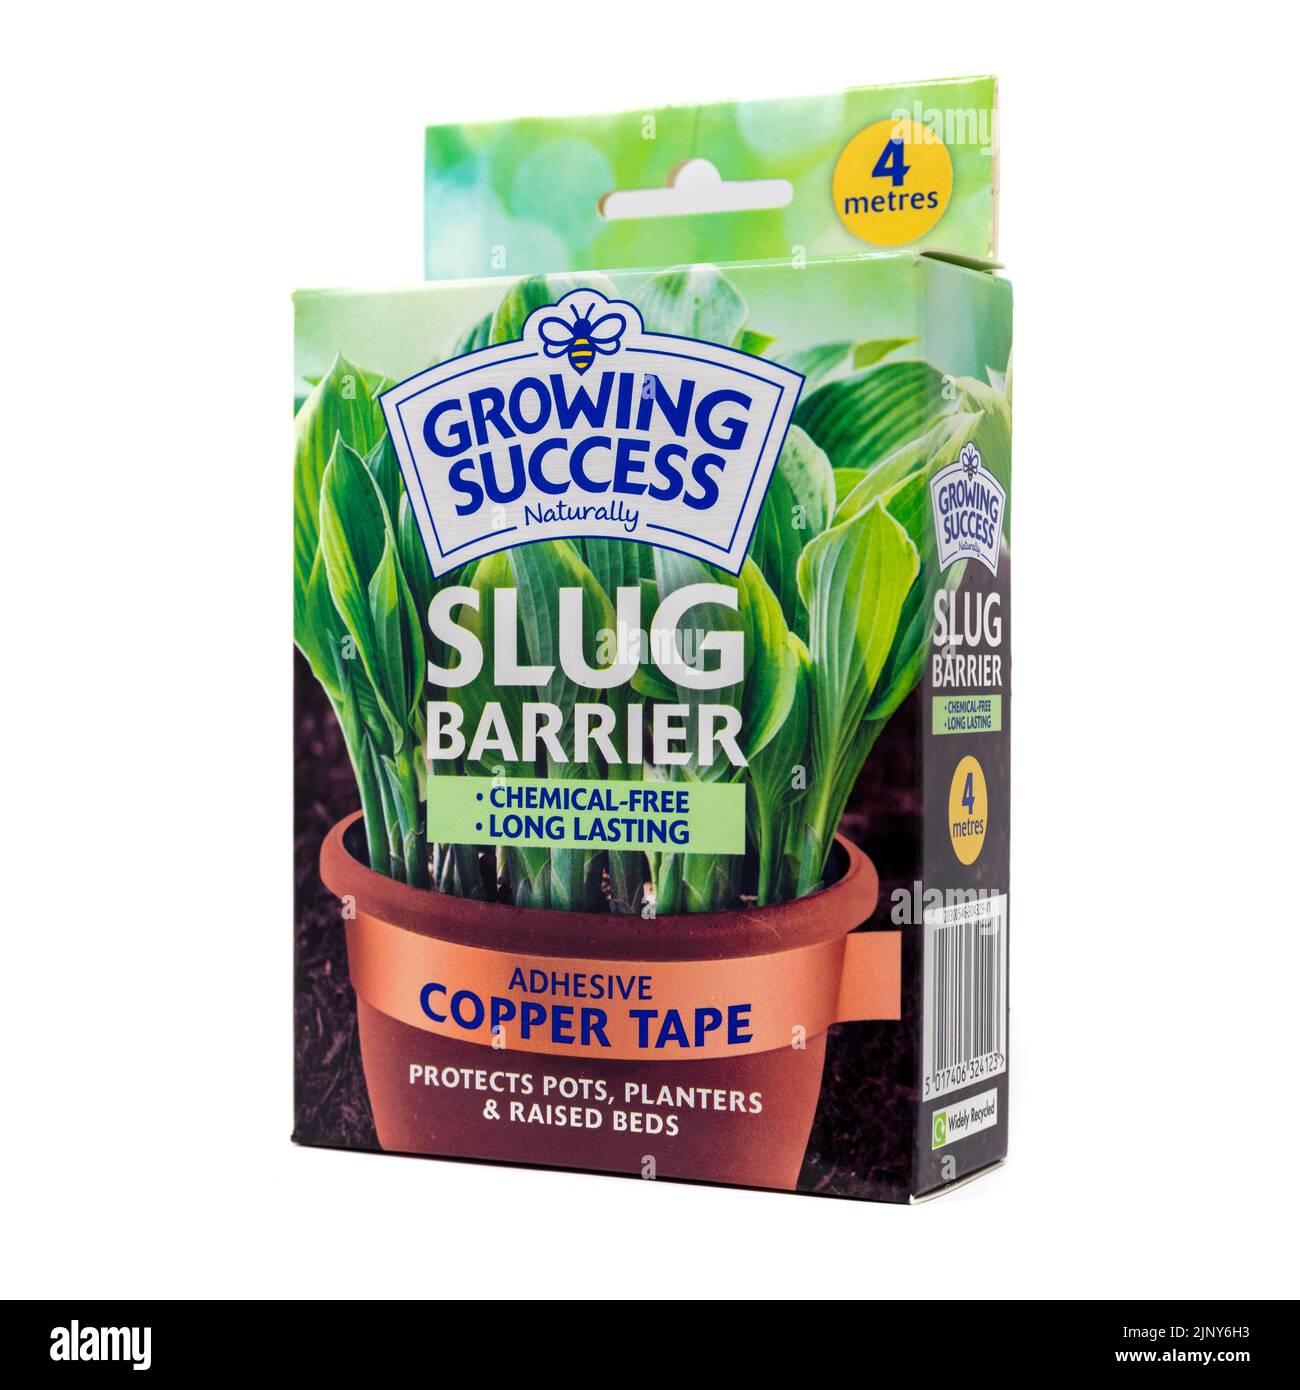 Growing Success Slug Barrier Copper Tape Stock Photo